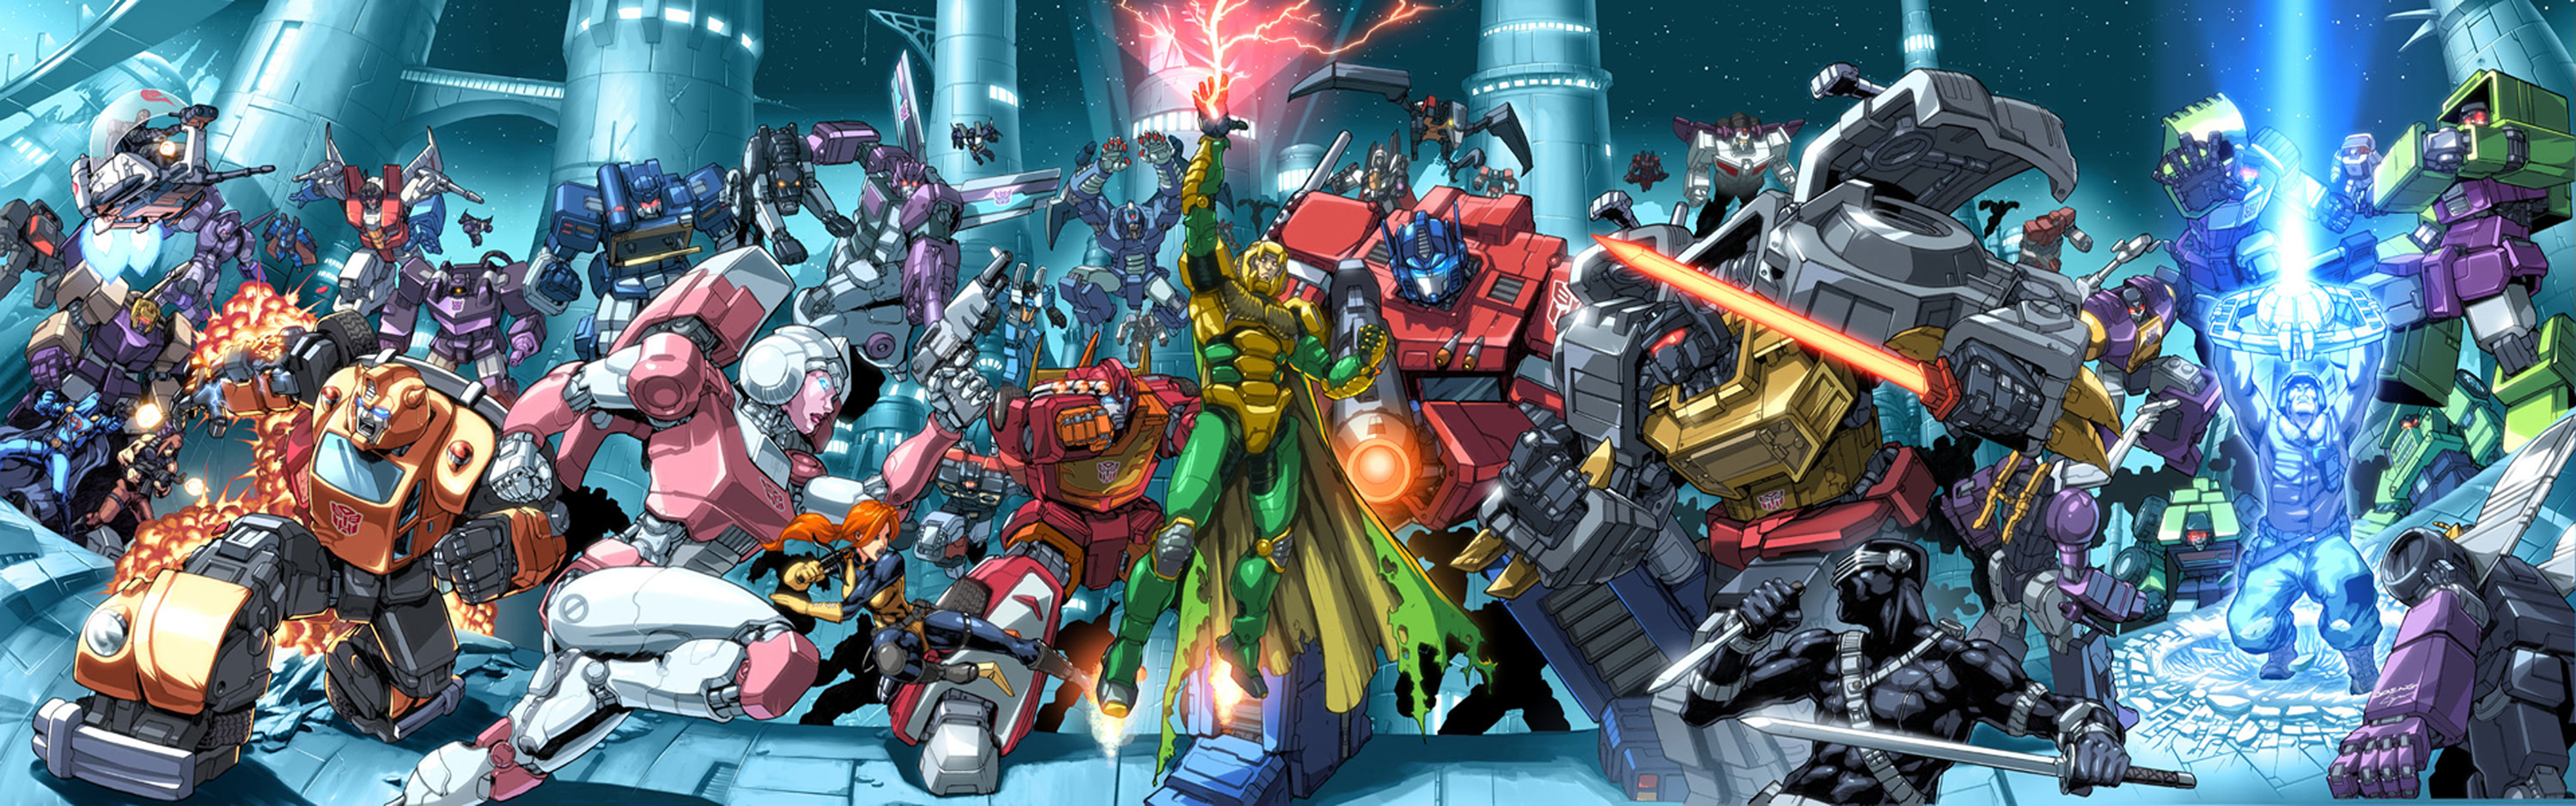  GI Joe vs Transformers Comics superhero weapons wallpaper background 4000x1251